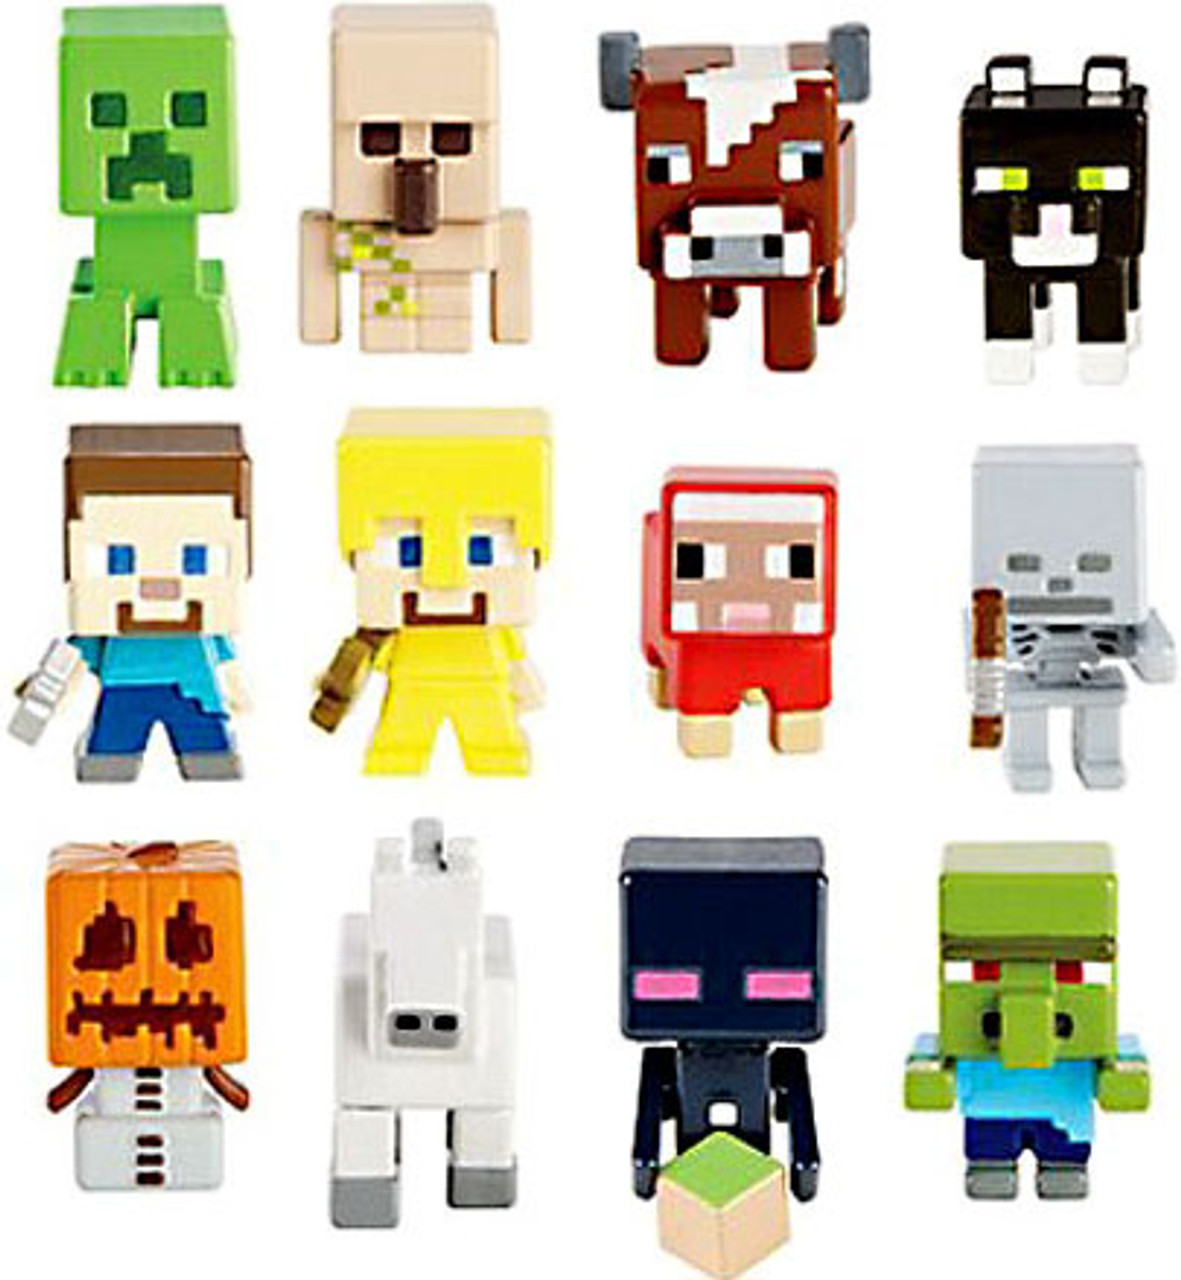 Miniature Minecraft Figures